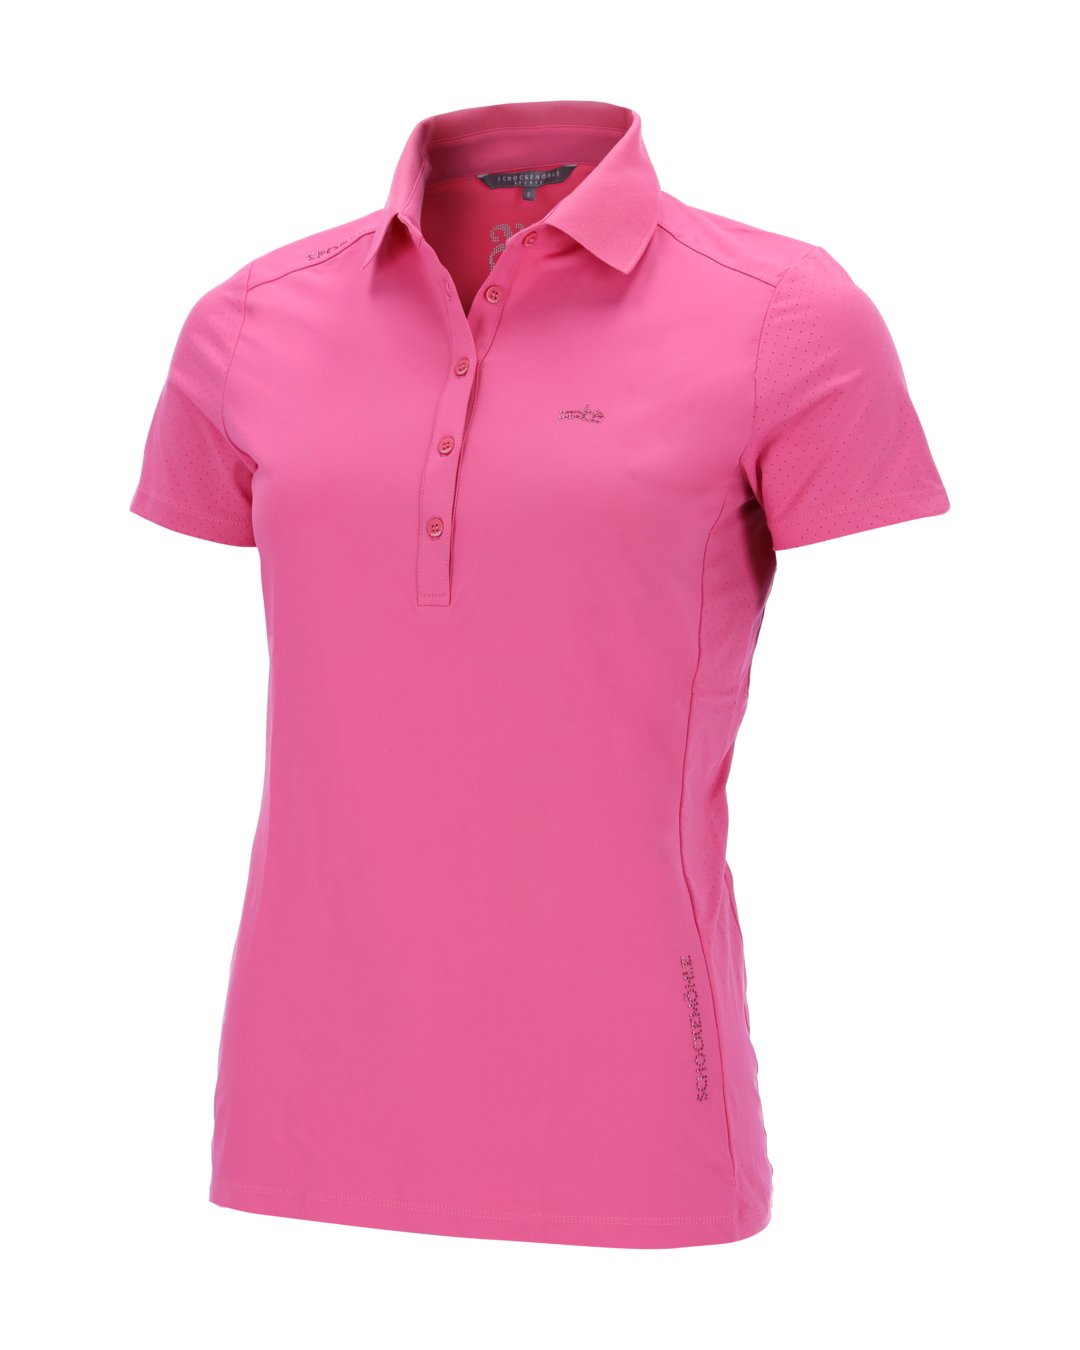 Poloshirt SPMilla Style S Hot Pink